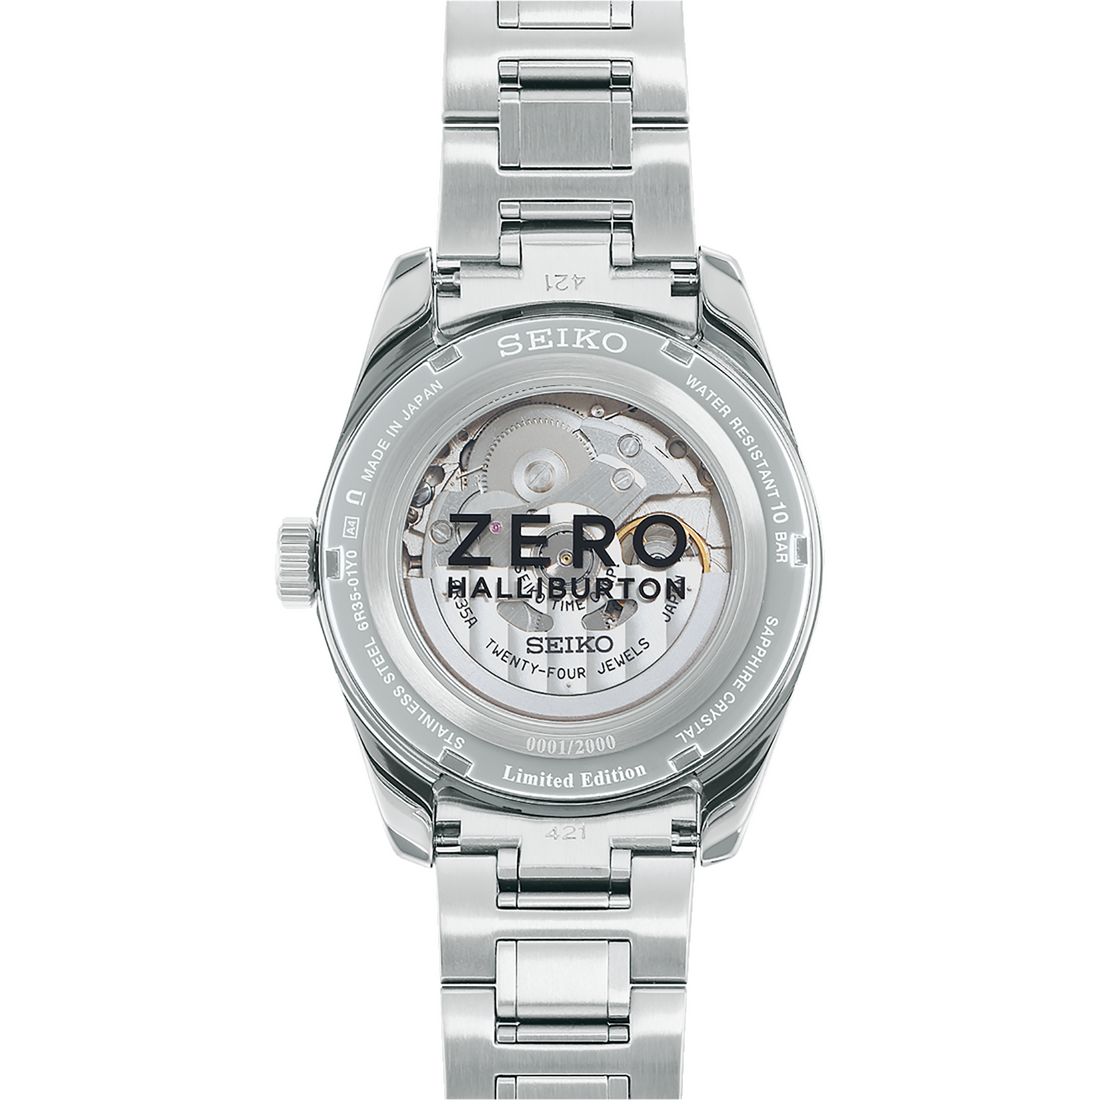 Seiko Presage SPB277 Sharp-Edged Zero Halliburton Limited Edition Automatic Watch